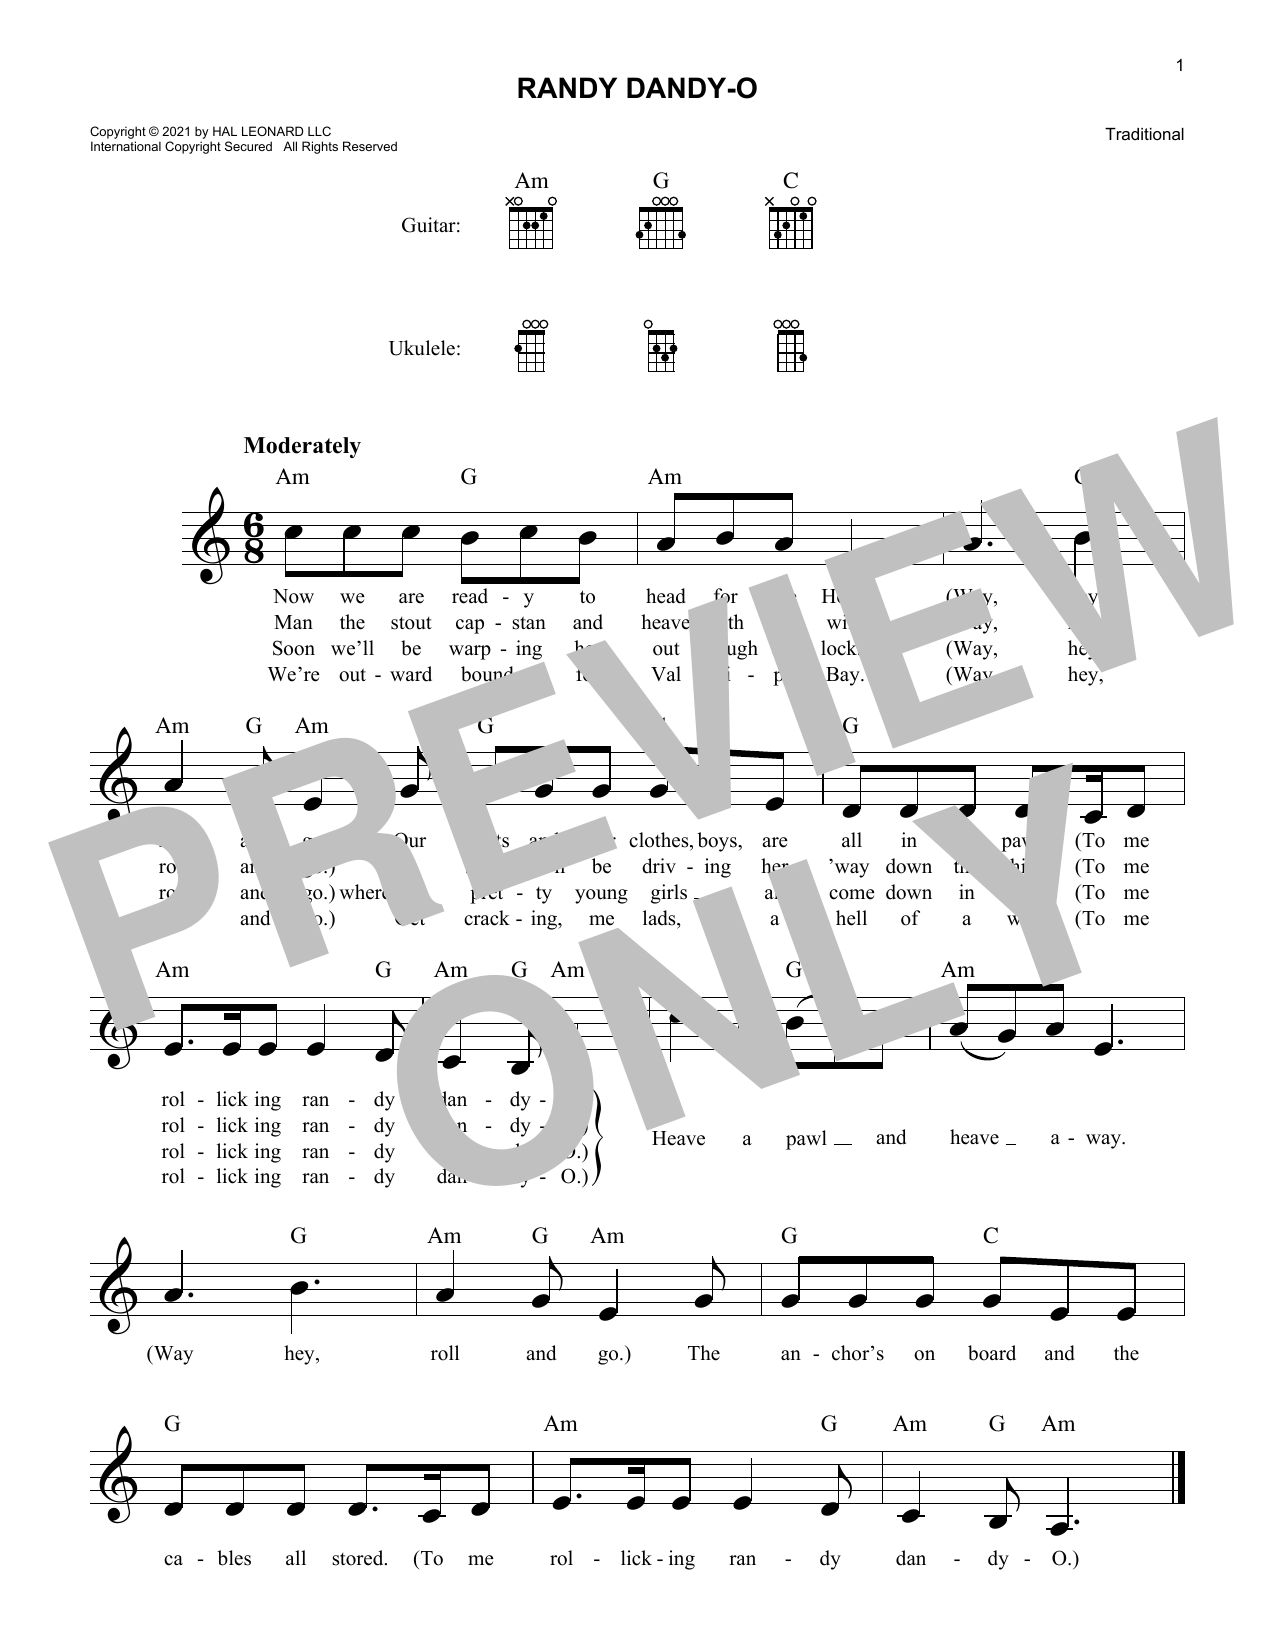 Download Traditional Randy Dandy-O Sheet Music